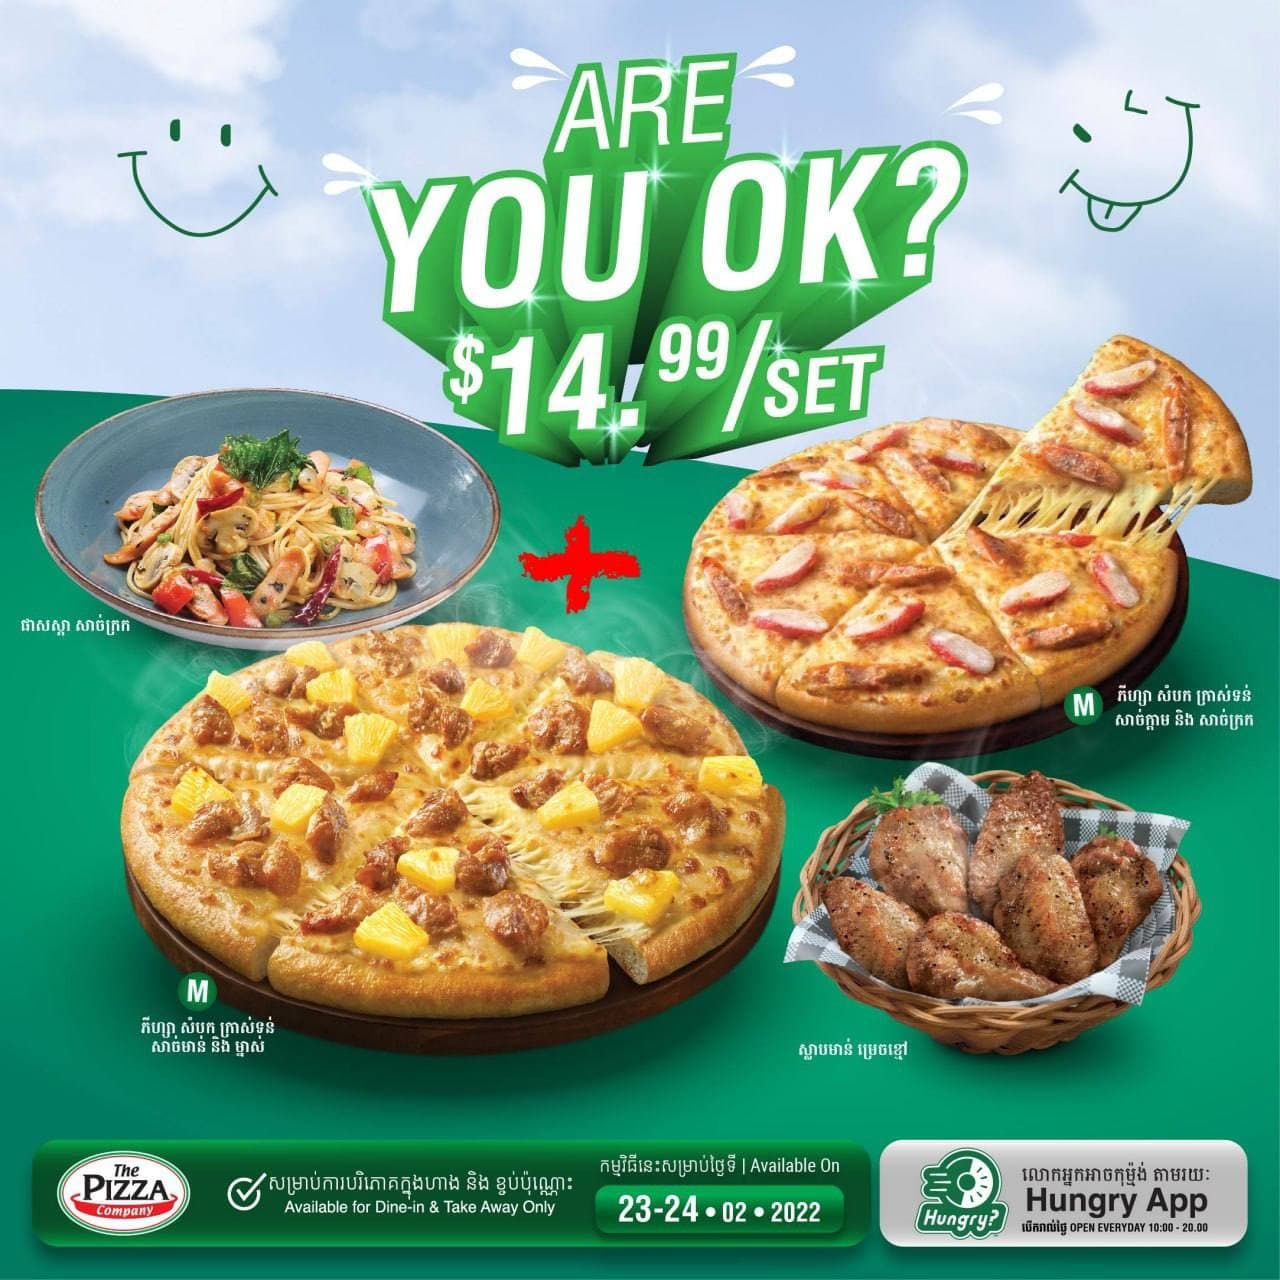 The Pizza Company – Are you okay? Set